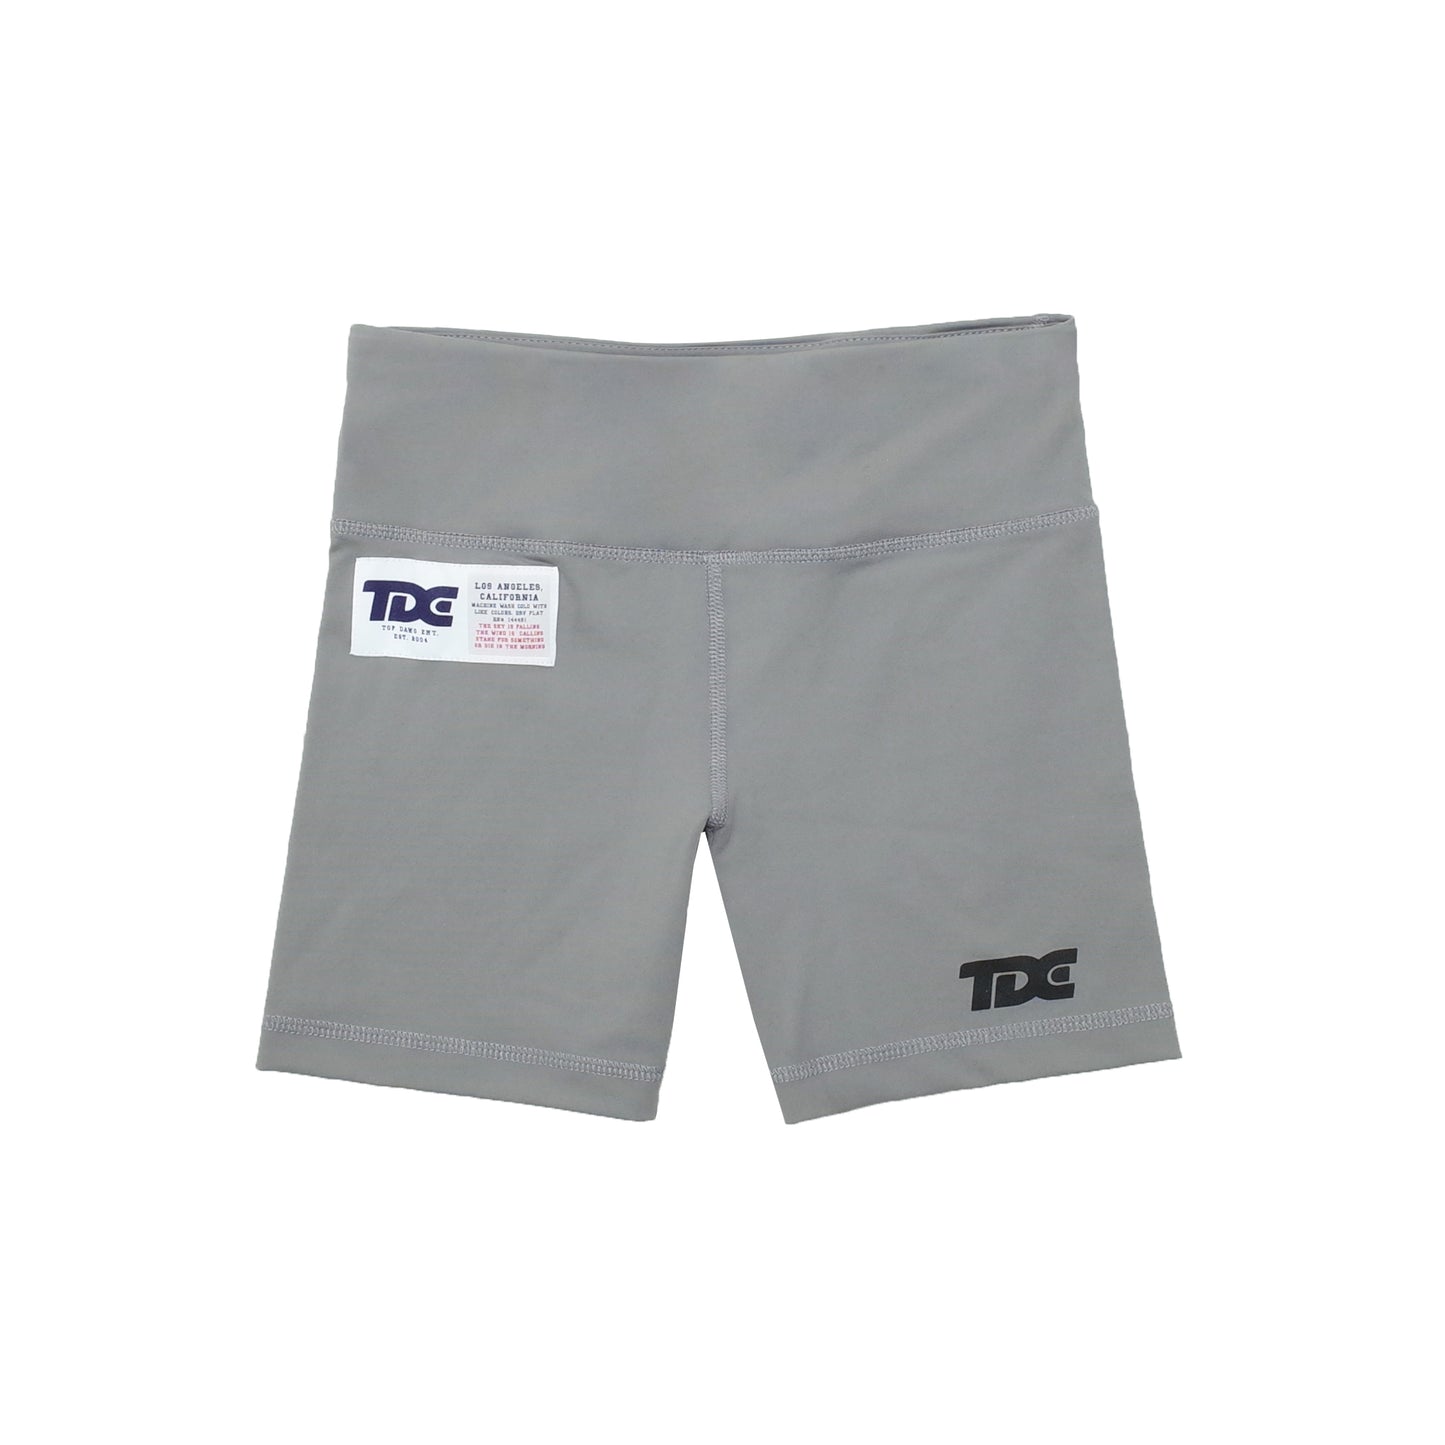 TDE New Classic Woman's Shorts (Gray)